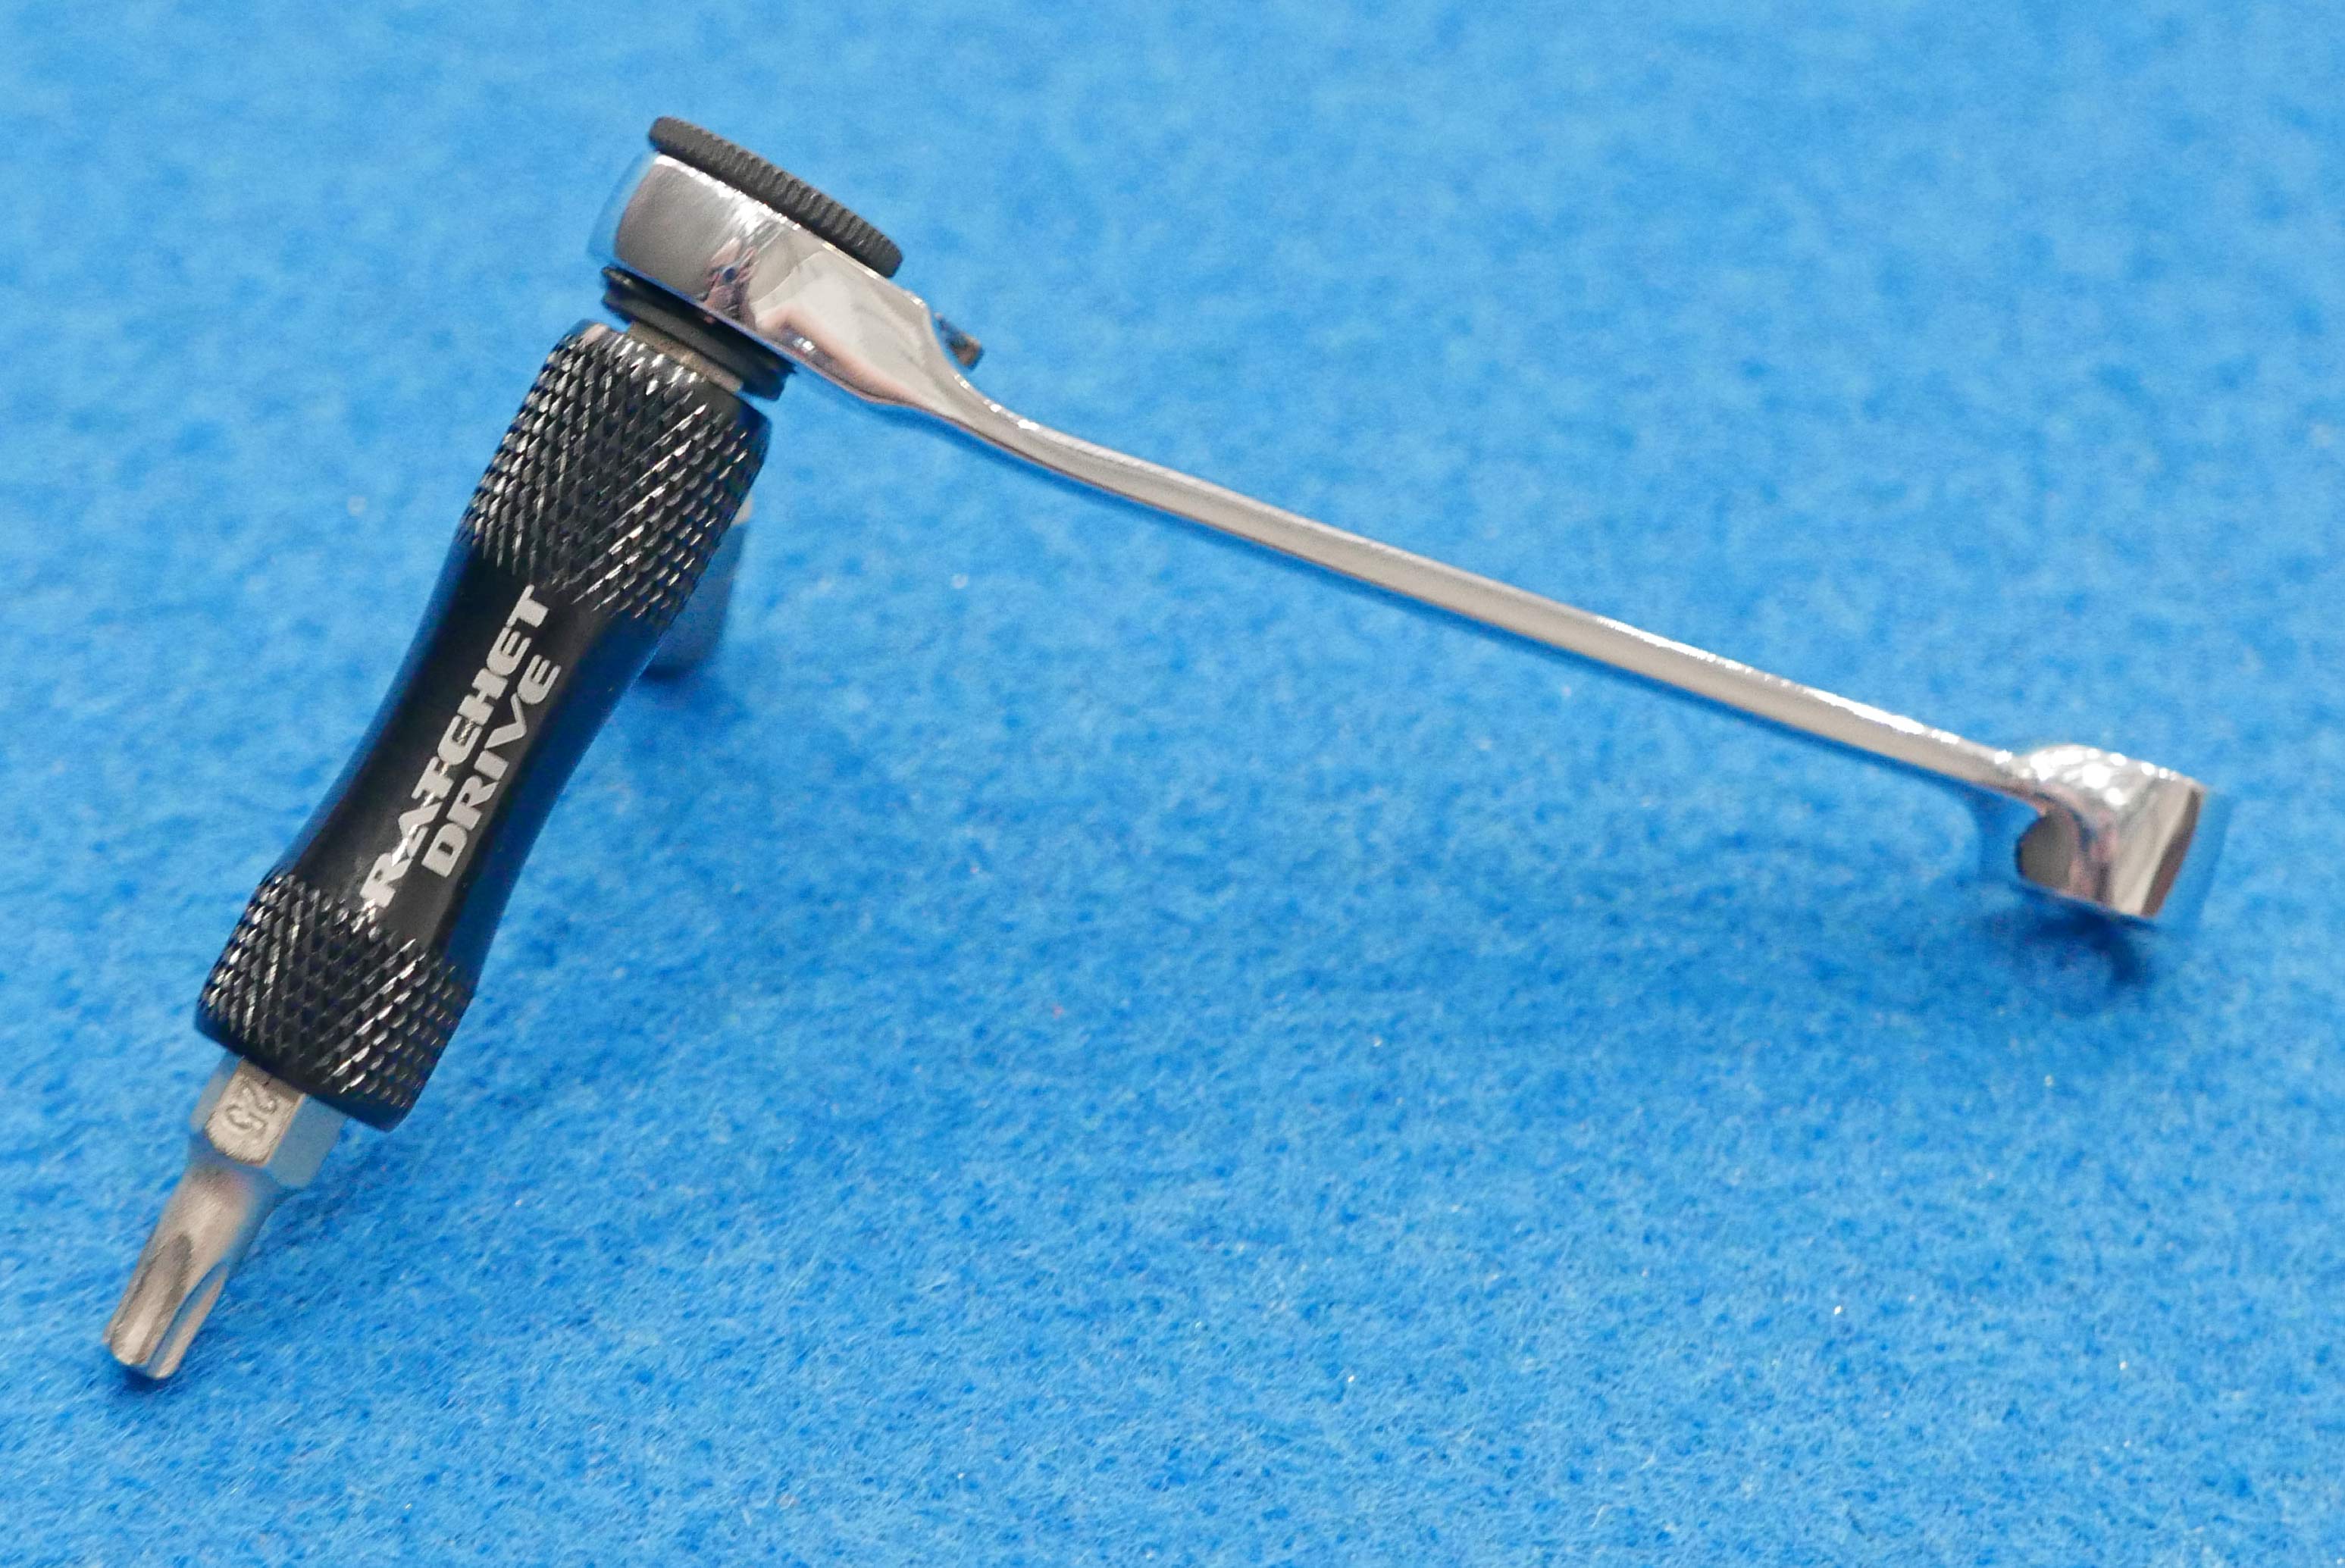 Lezyne Ratchet Kit multi-tool wrench, mini ratchet wrench set with bits